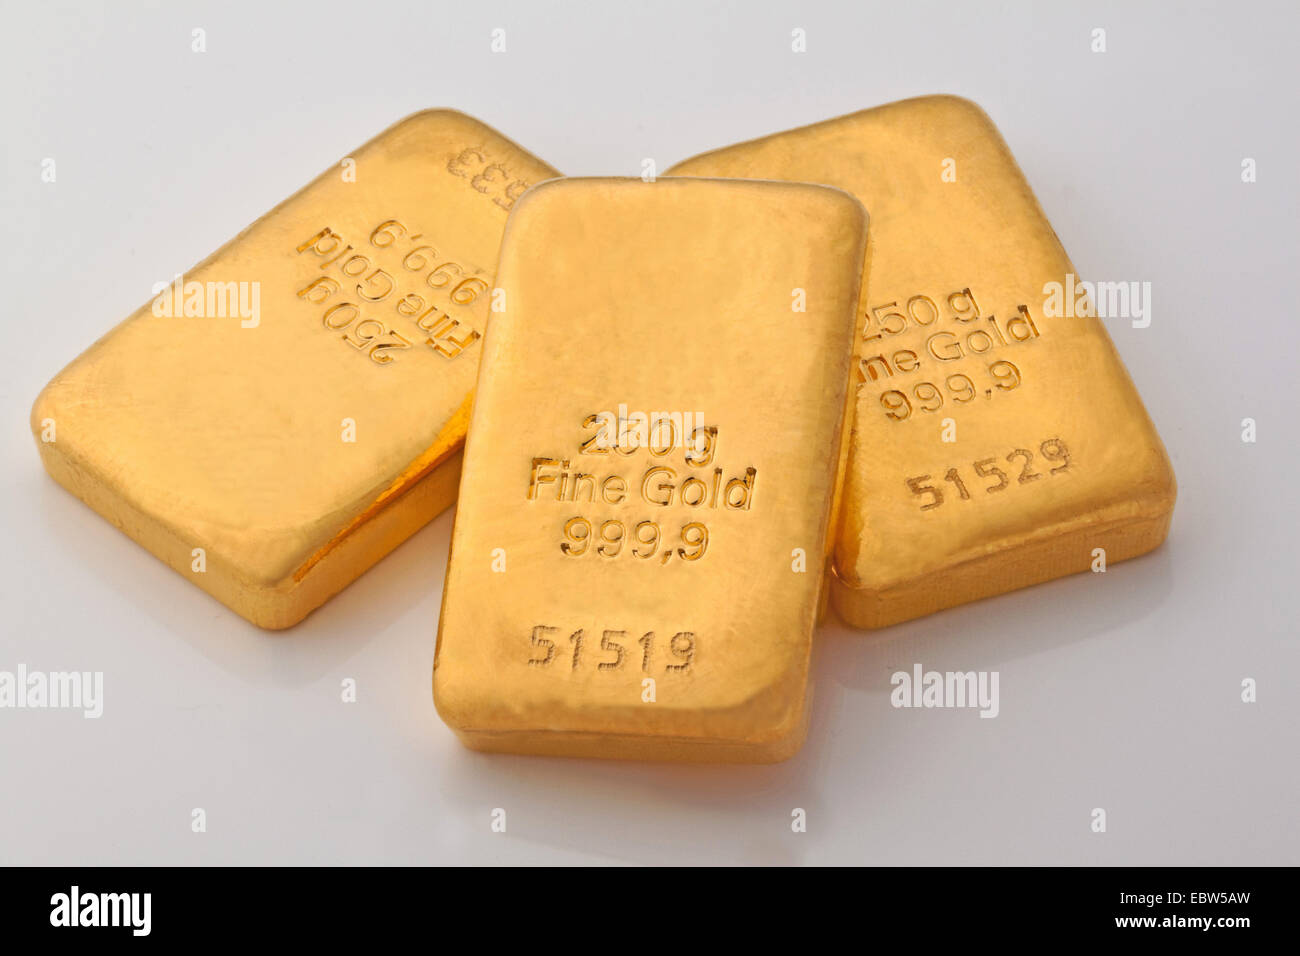 drei Goldbarren, 250 g Feingold 999,9 Stockfoto